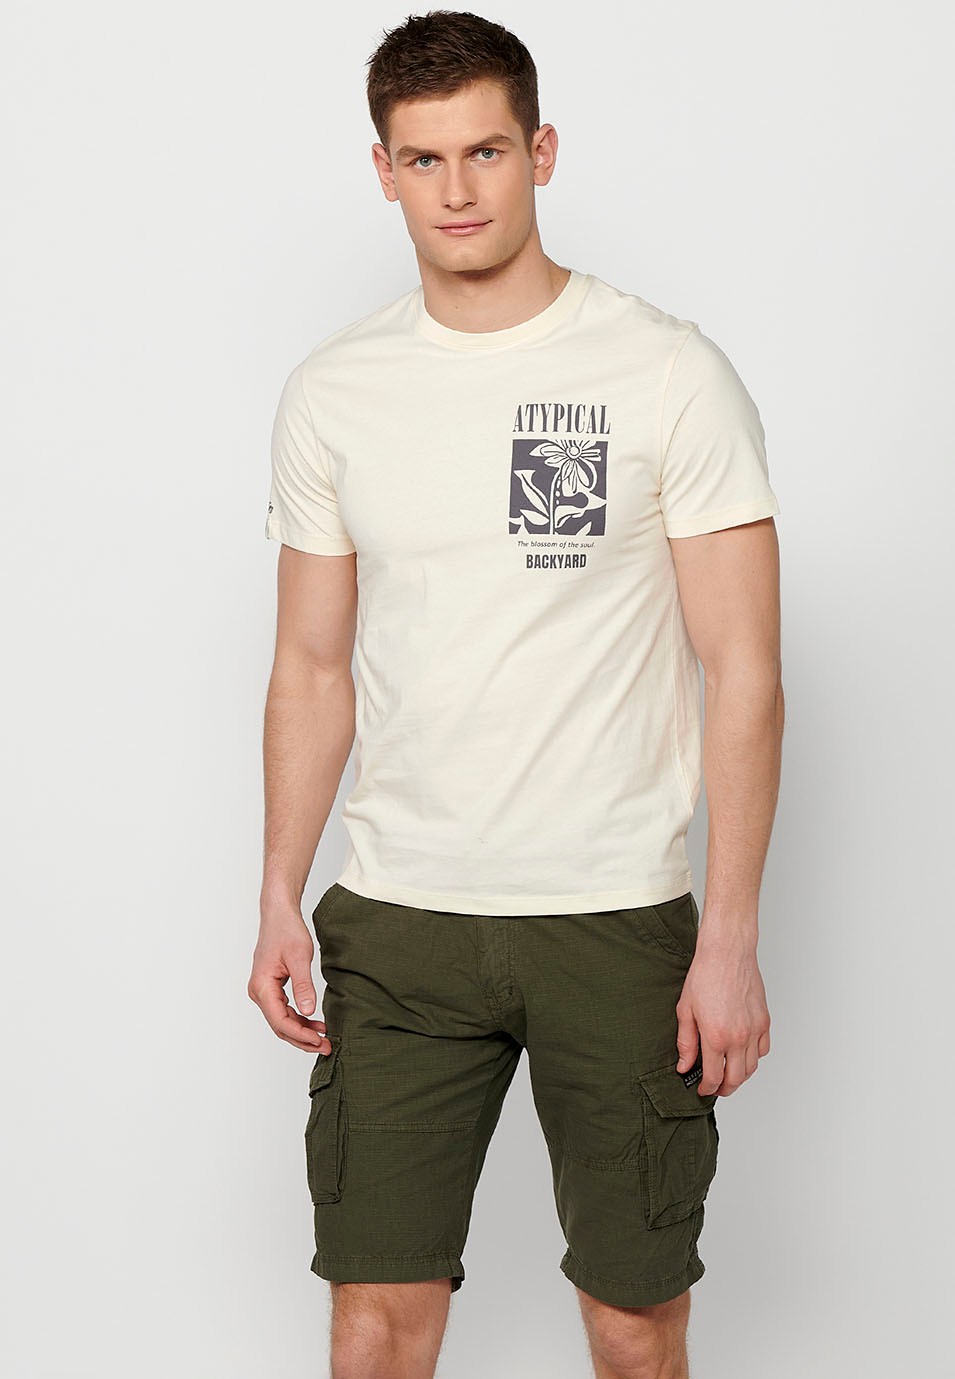 Men's black short-sleeved cotton T-shirt, round neck and cream print